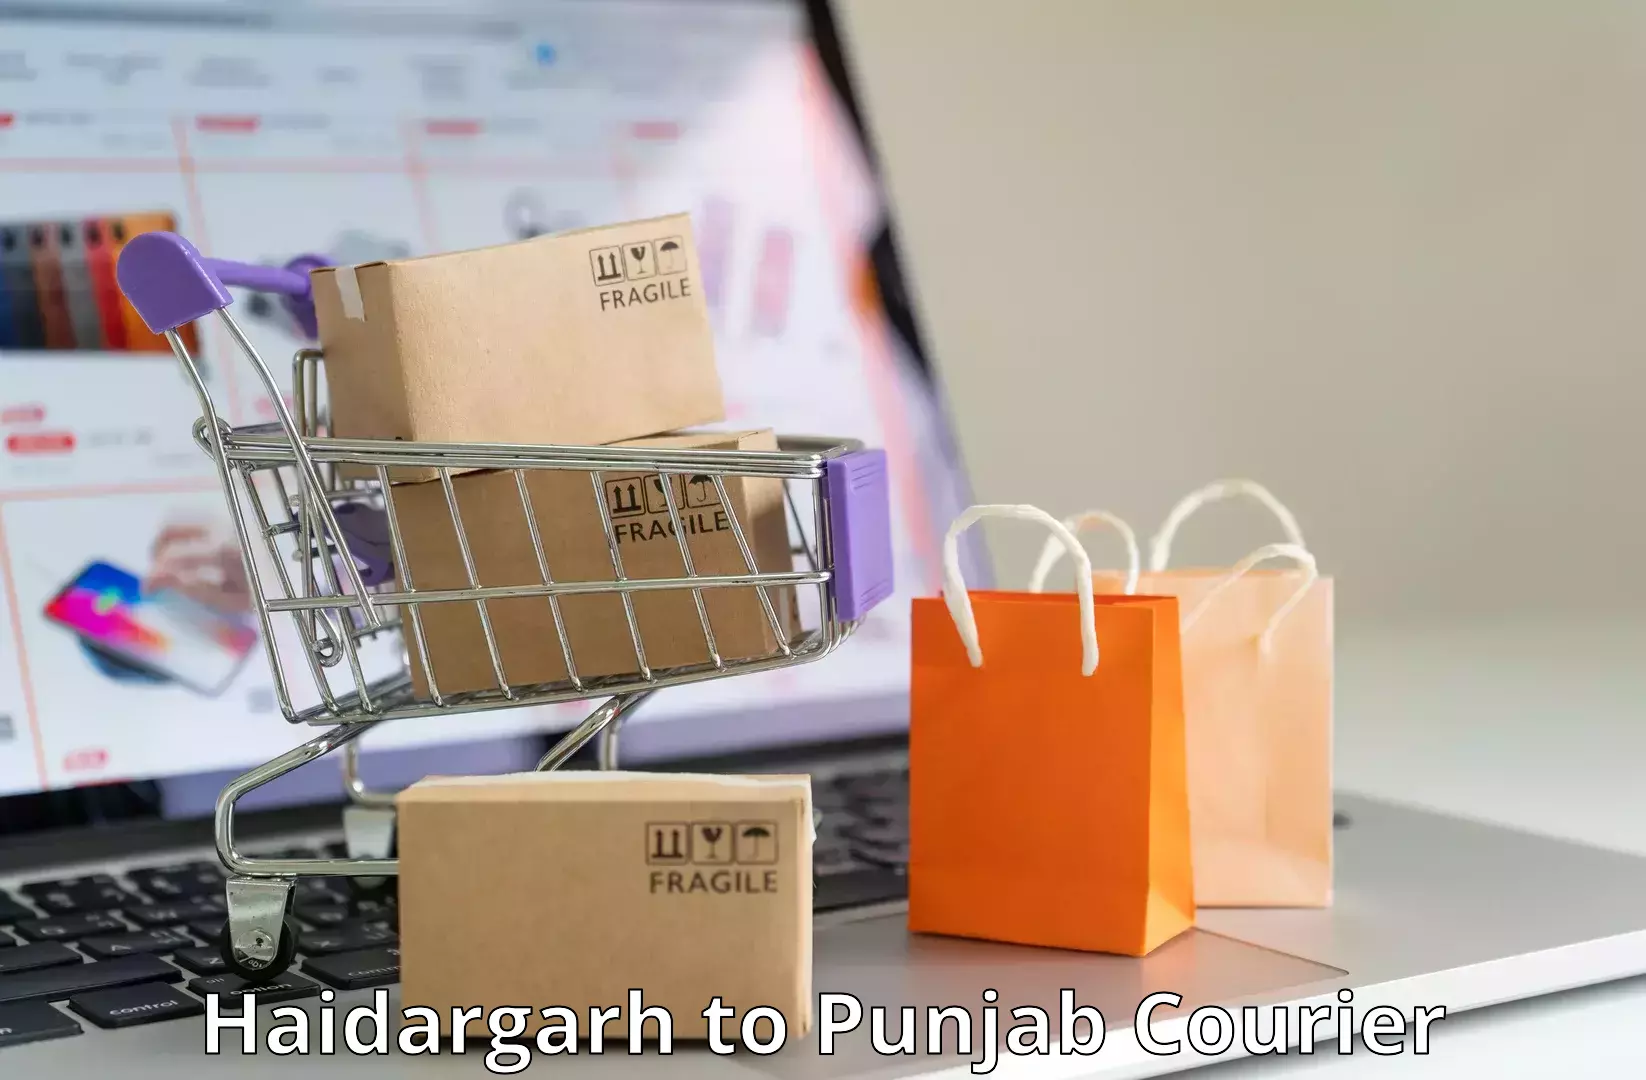 Premium courier solutions Haidargarh to Fatehgarh Sahib